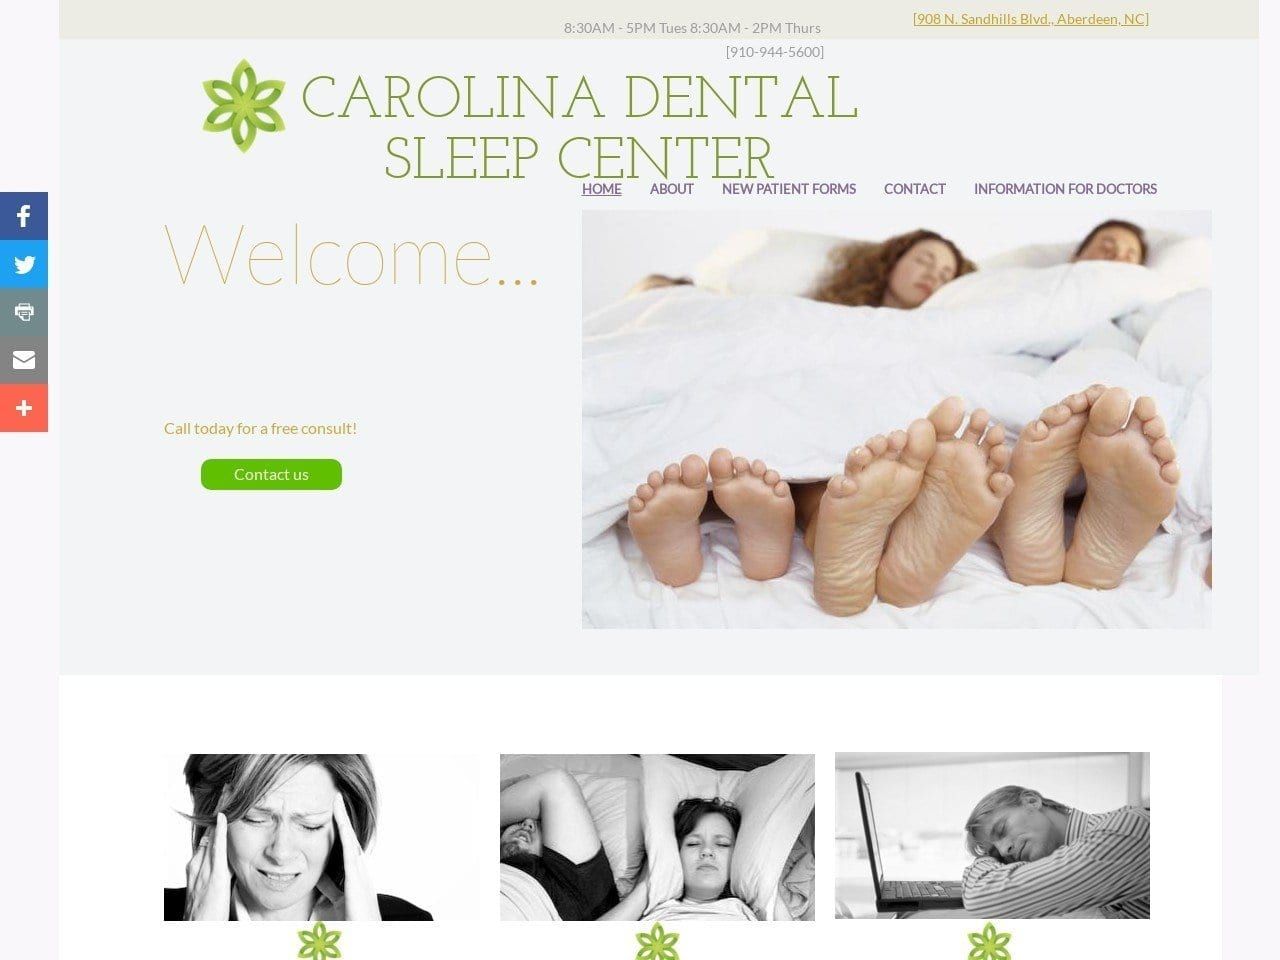 Carolina Dental Sleep Center Website Screenshot from carolinadentalsleepcenter.com